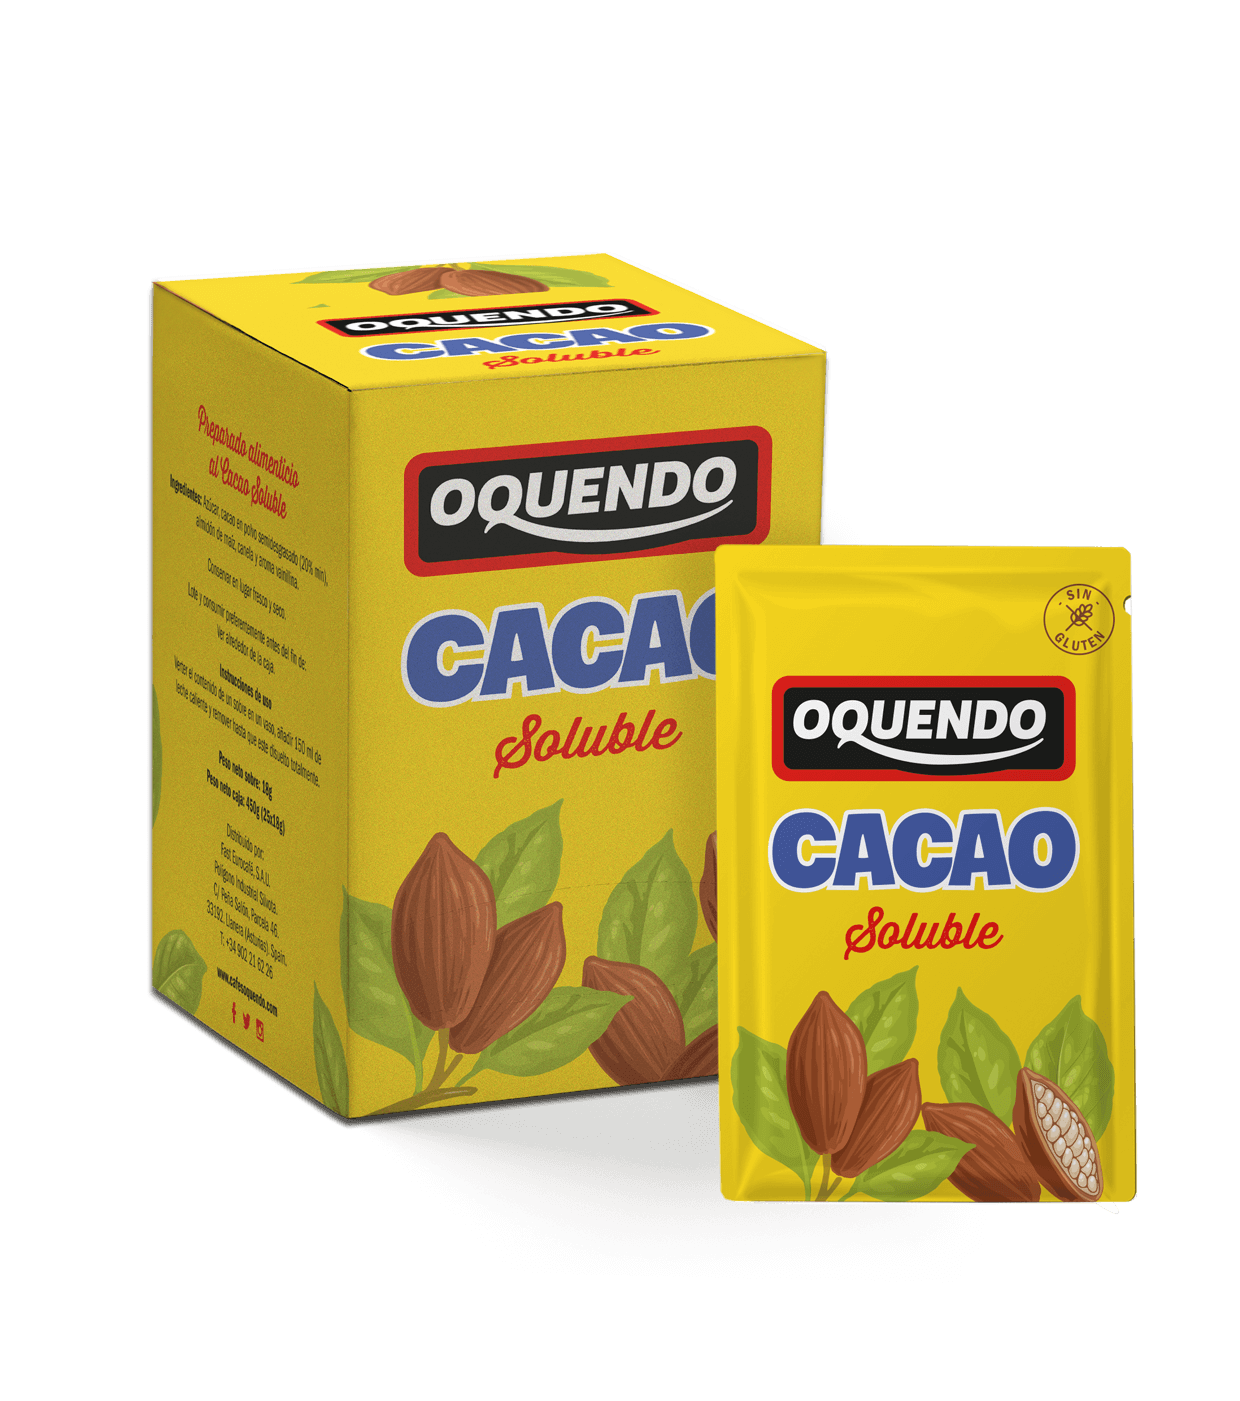 Oq_Cacao